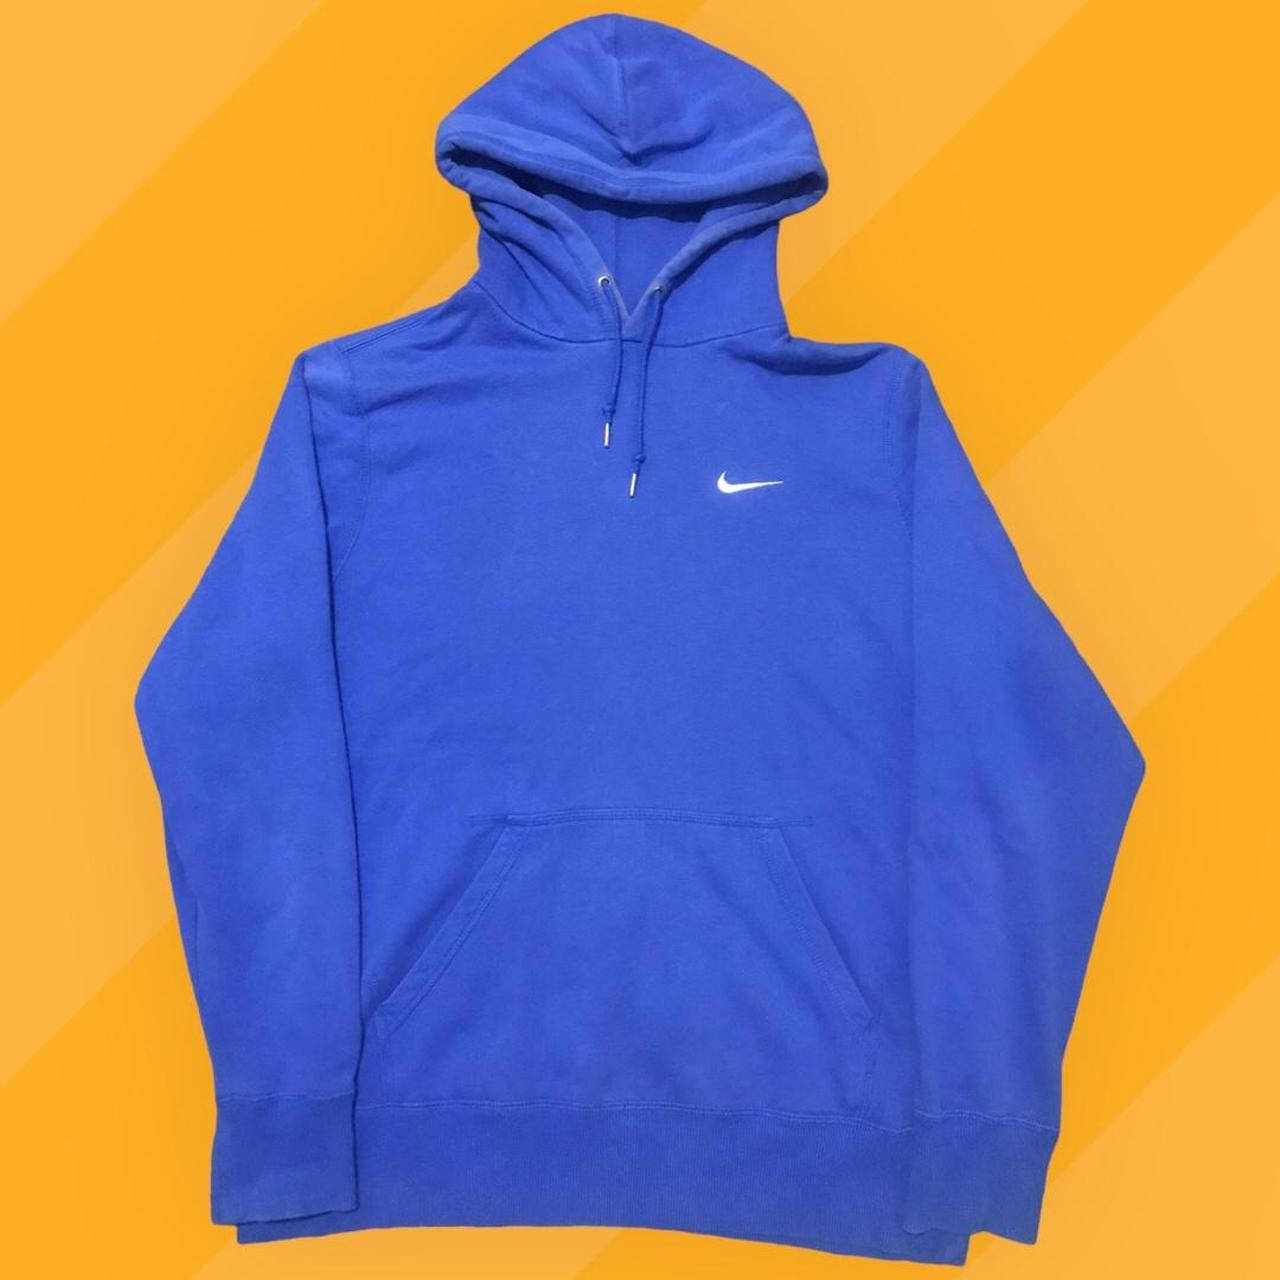 Nike Hoodie | Blue colourway | Embroidered Nike logo... - Depop